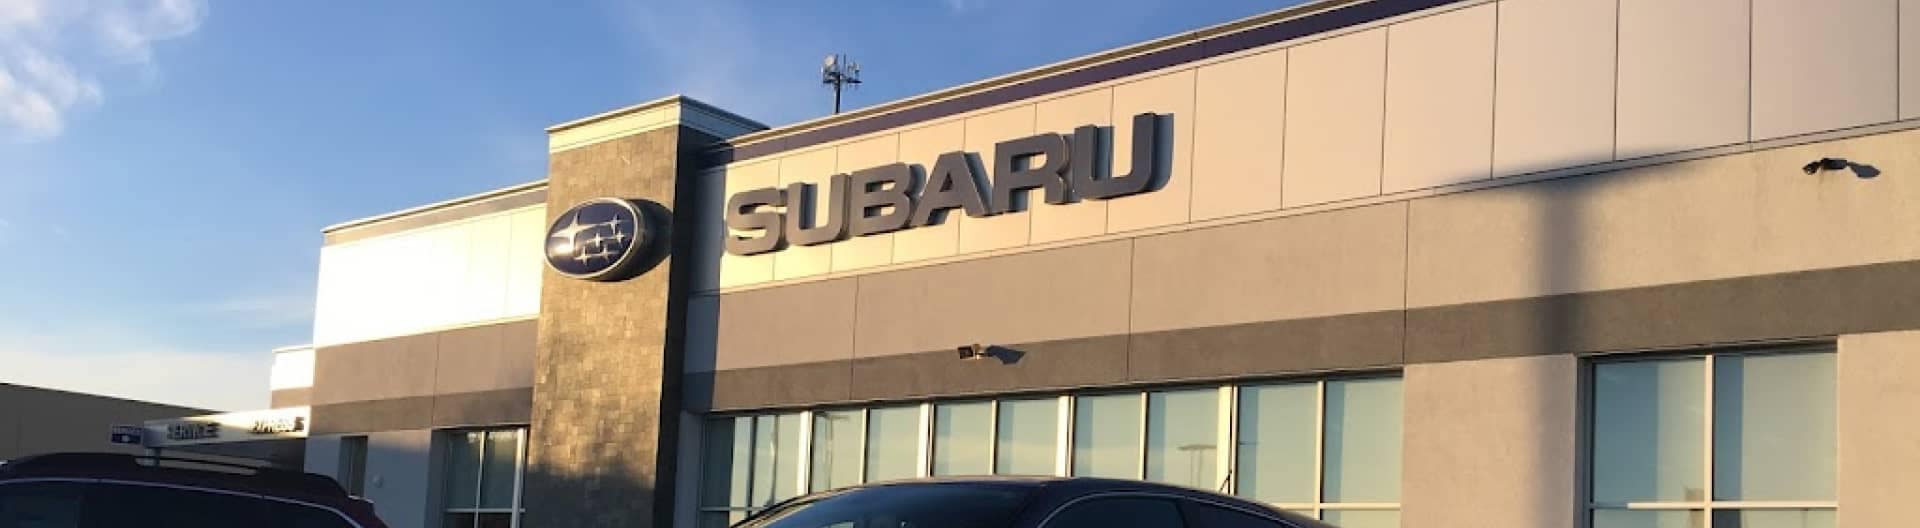 St. Cloud Subaru storefront